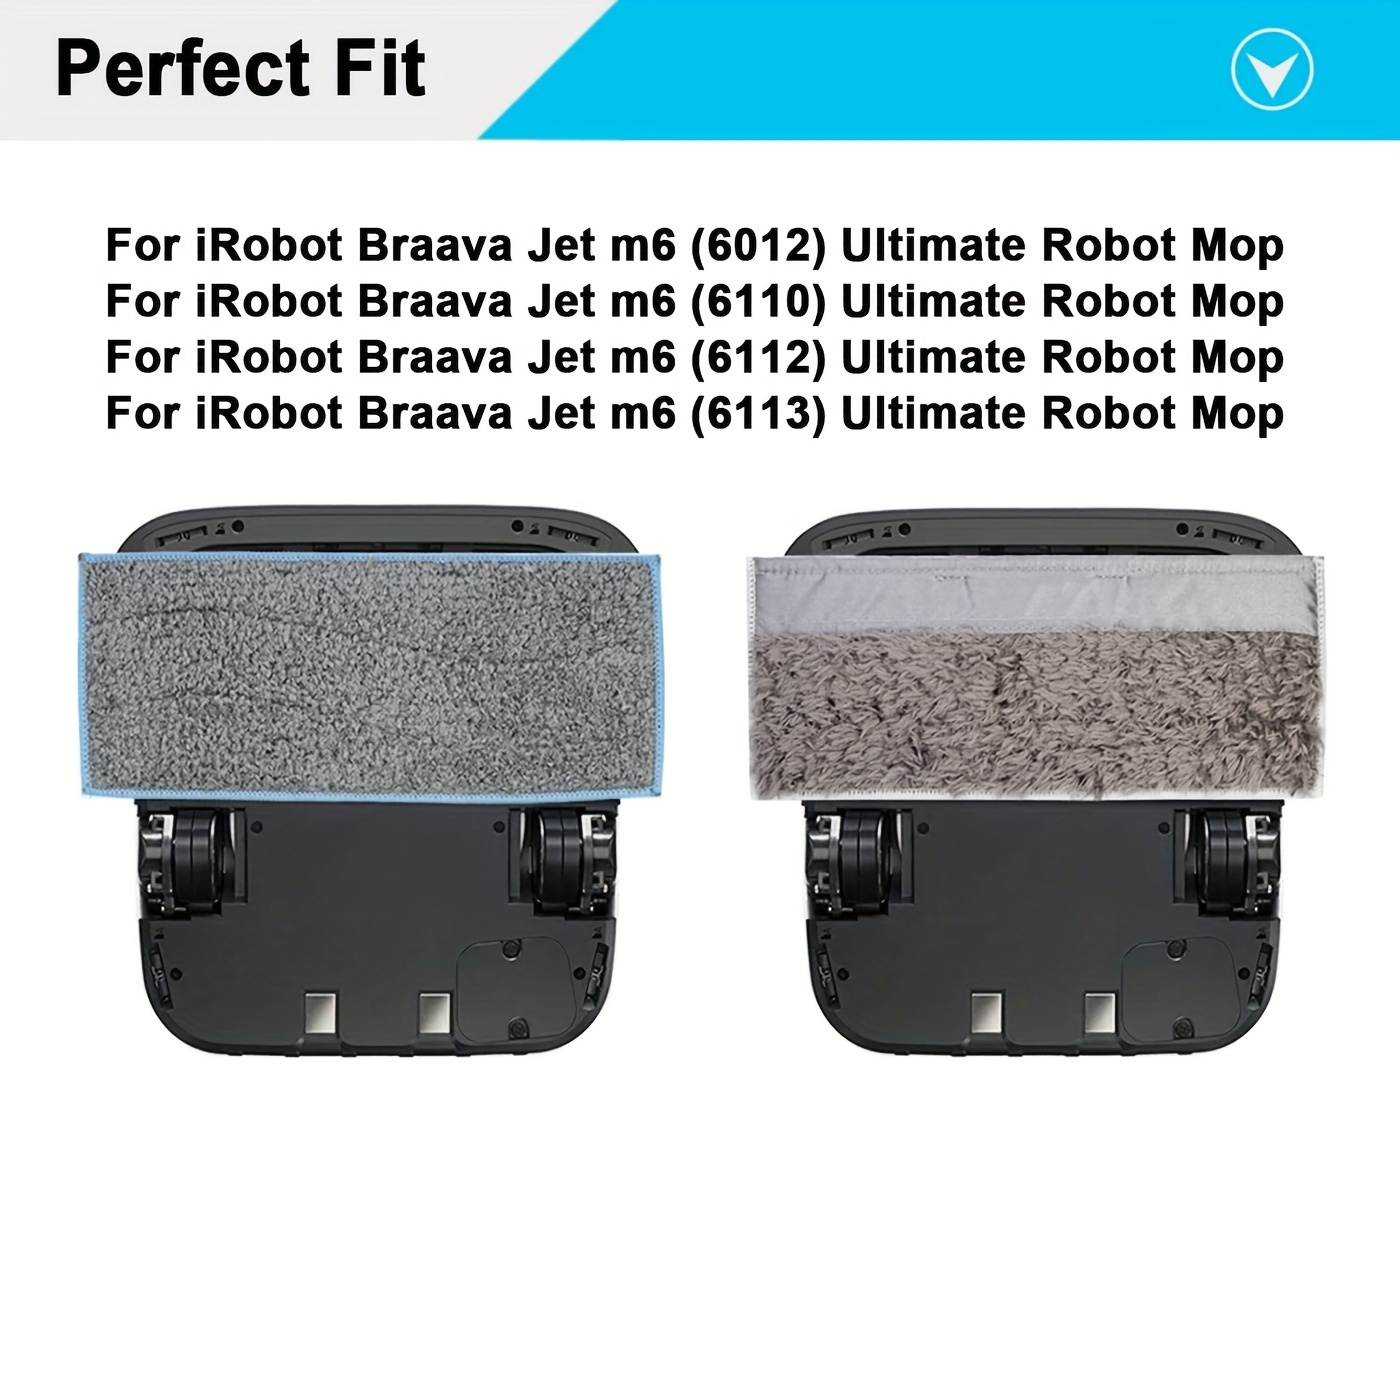 The Ultimate Robot Mop, Braava jet® m6